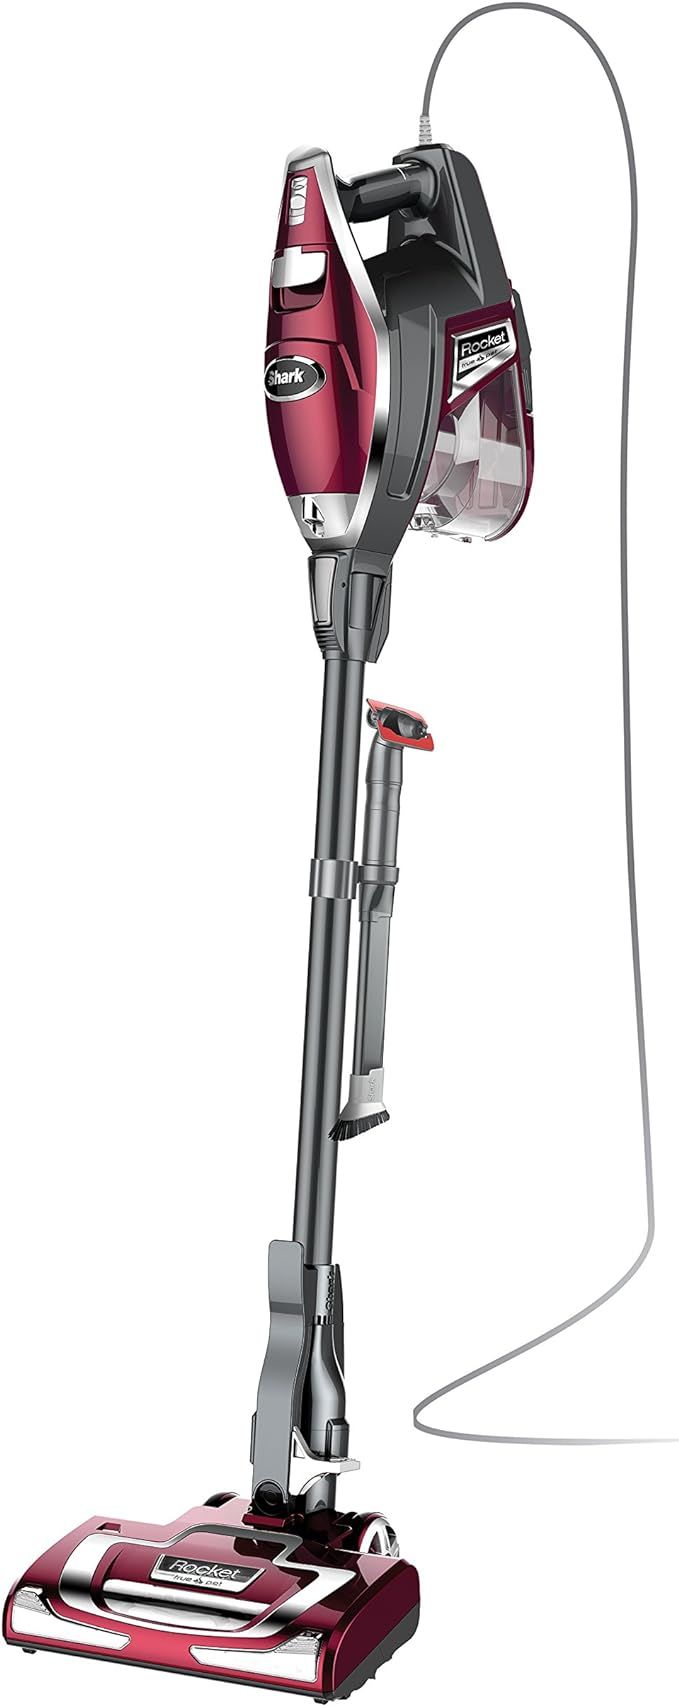 Shark HV322 Rocket Pet Plus Corded Stick Vacuum with LED Headlights, XL Dust Cup, Lightweight, Pe... | Amazon (US)